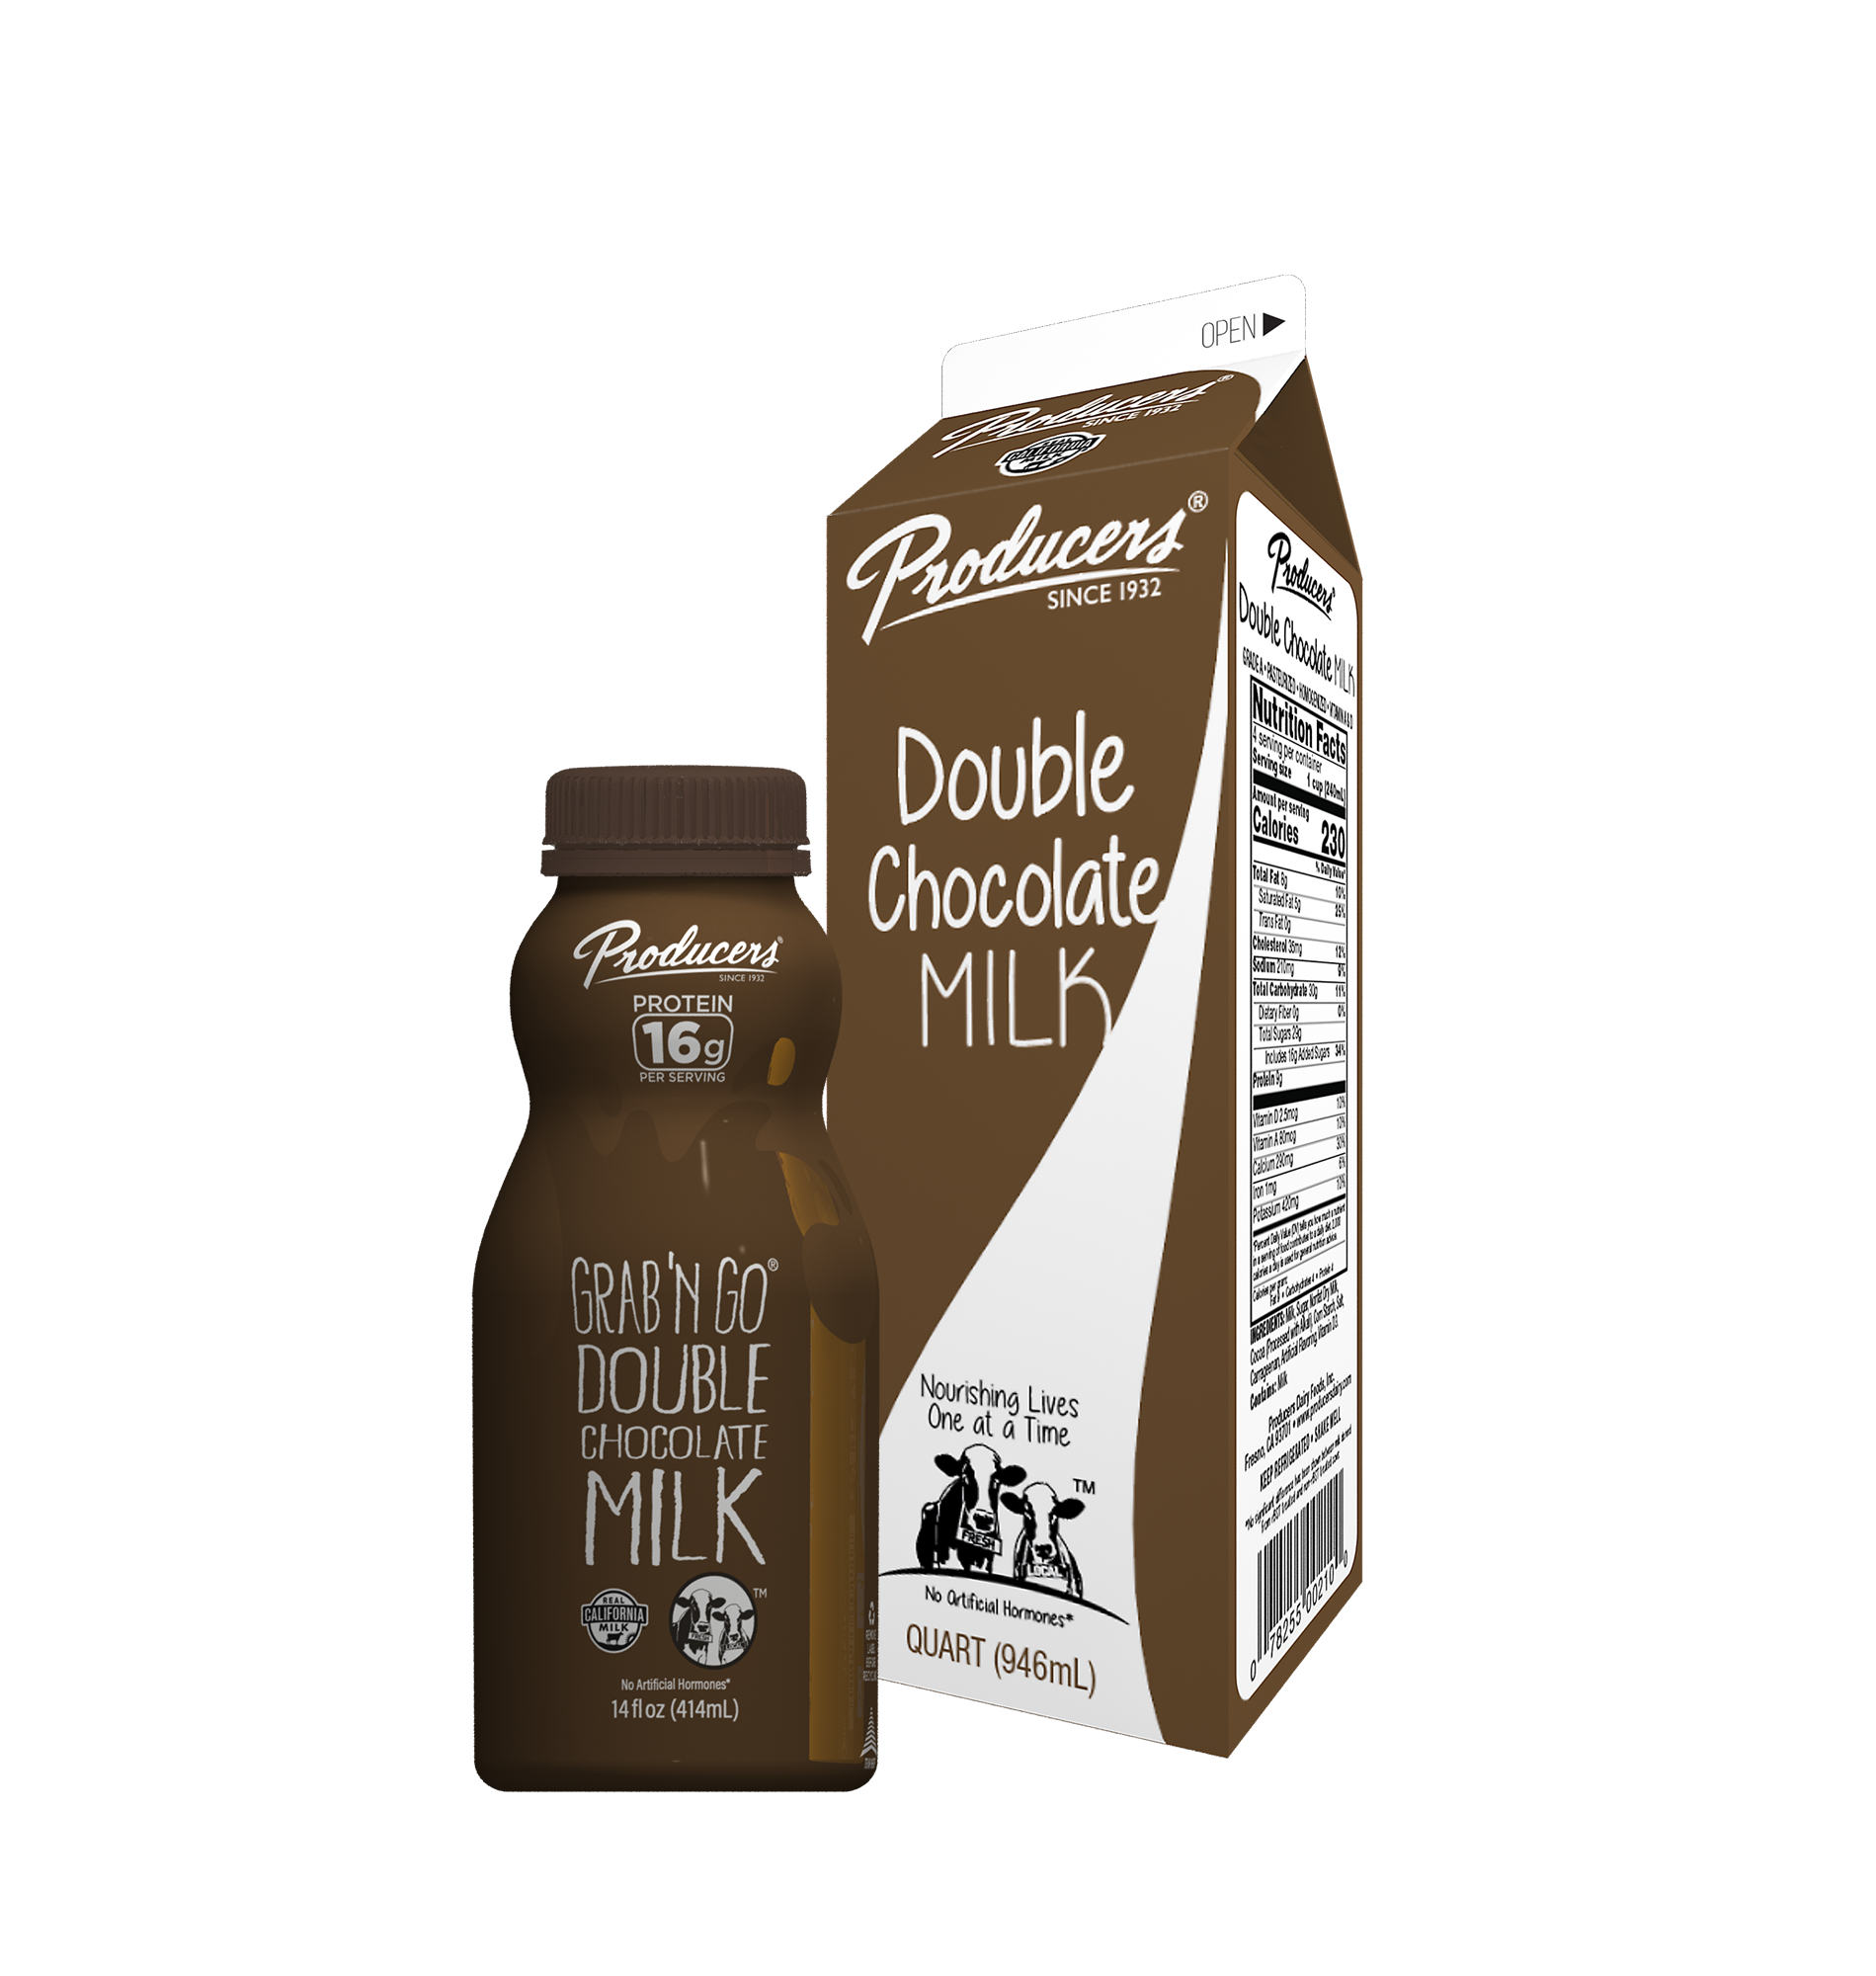 Double Chocolate Milk Family: Quart, Grab N Go